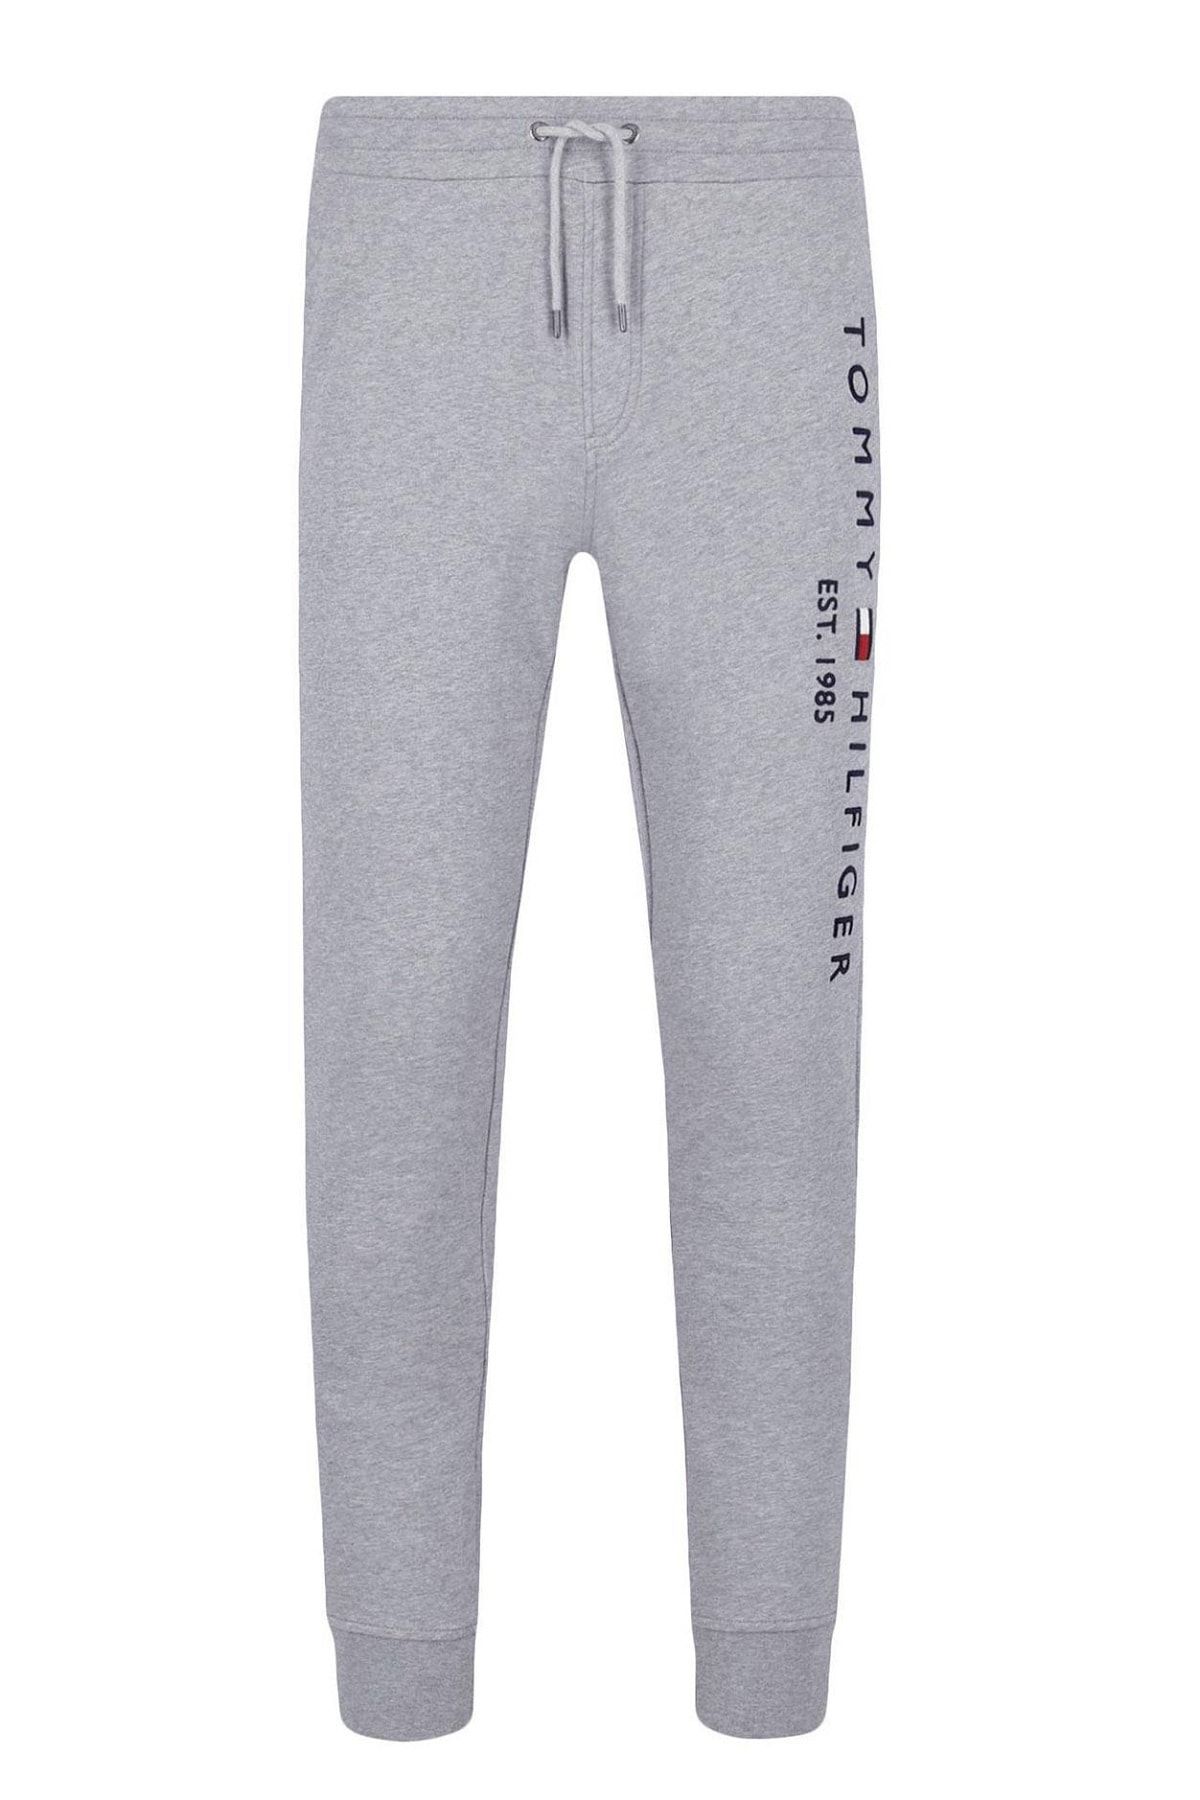 Tommy Hilfiger Men\'s Gray Basic Sweatpants Mw0mw08388-grey - Trendyol